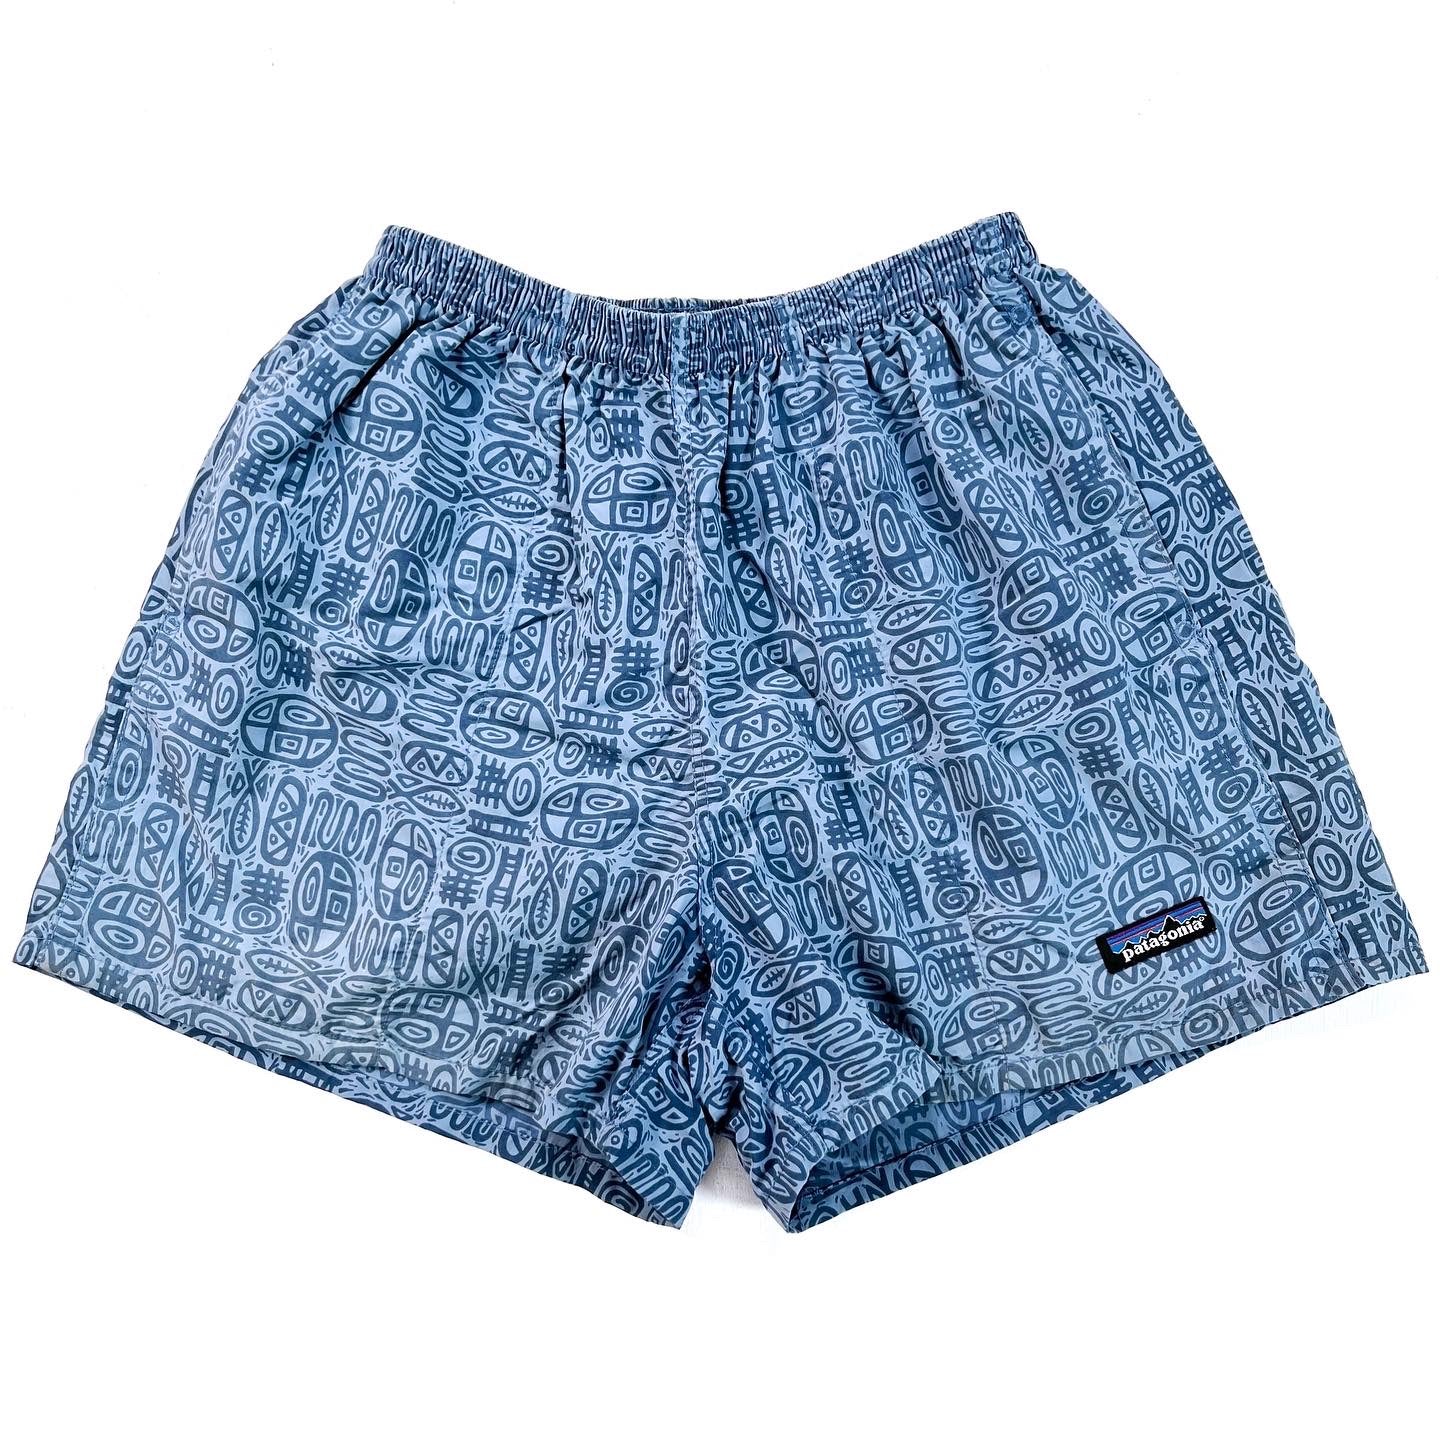 2001 Patagonia Mens 4” Printed Baggies Shorts, Blue (S)